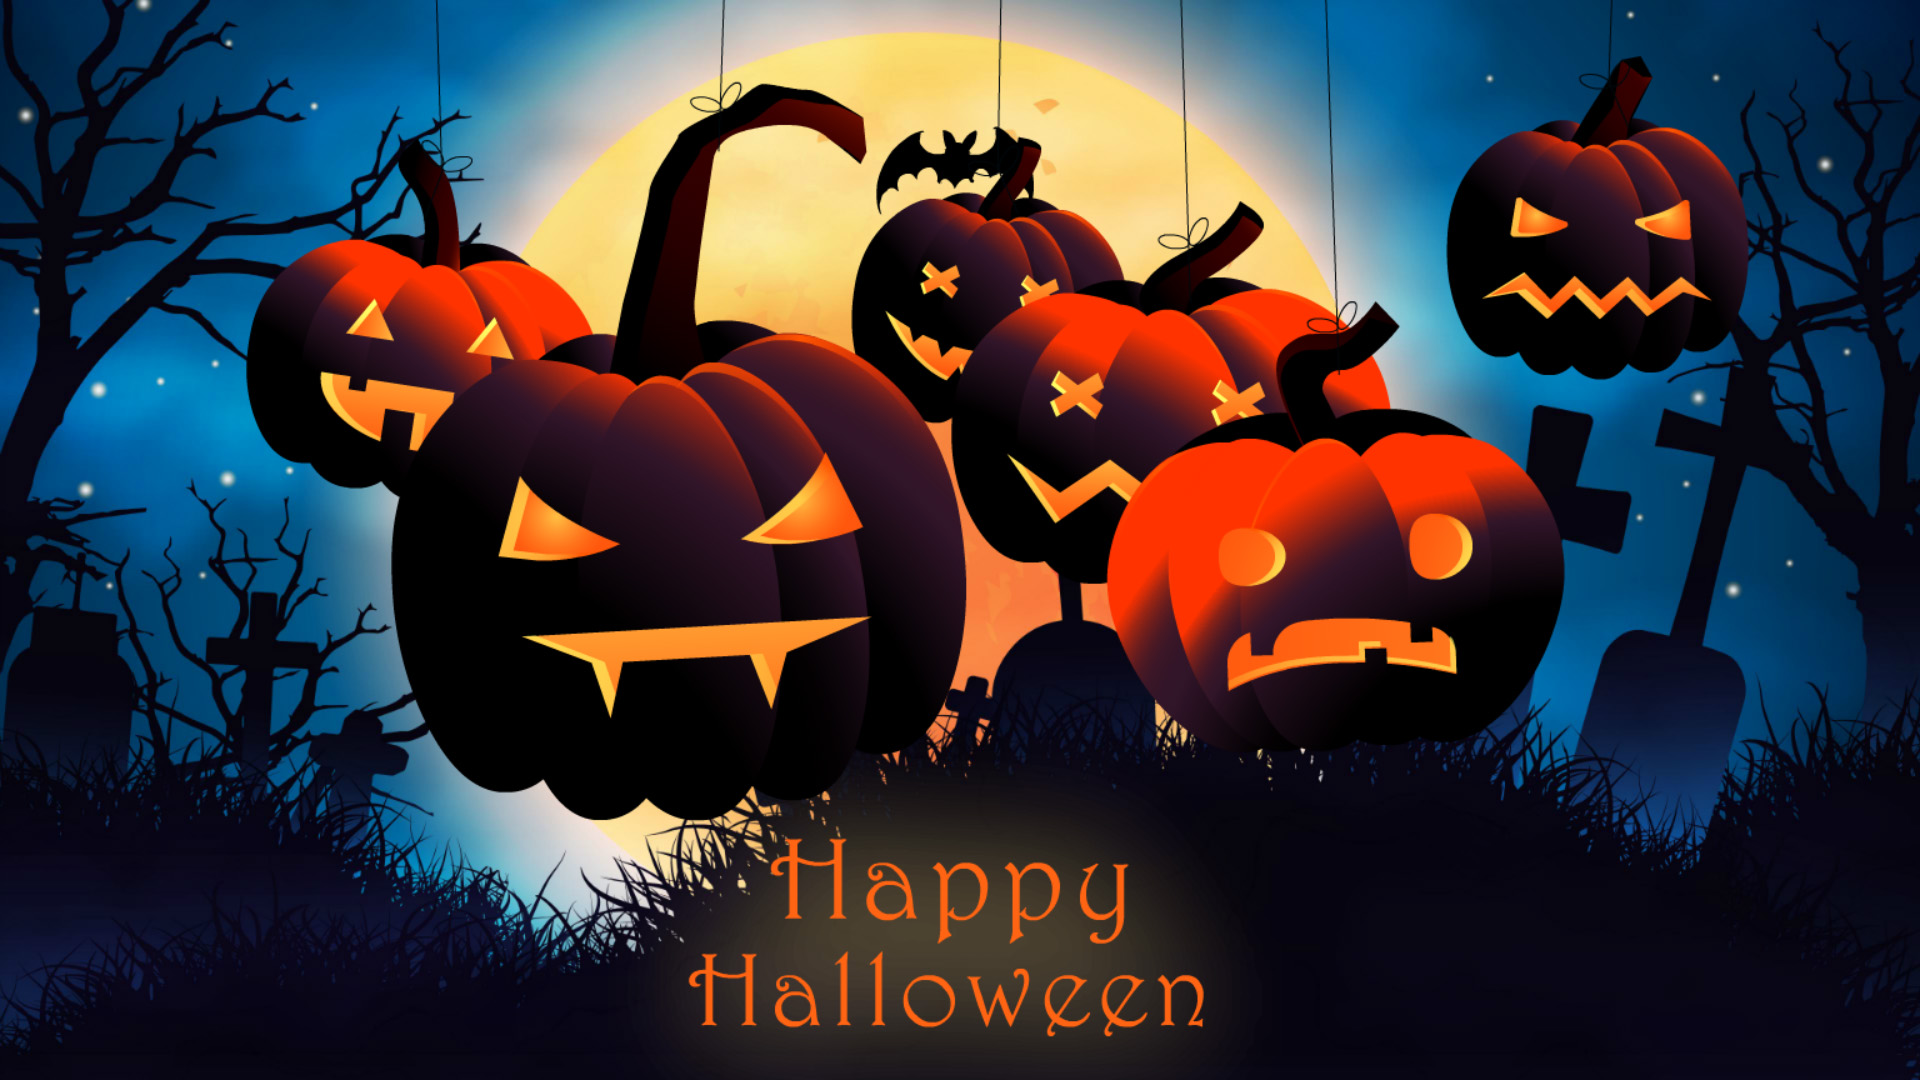 Free Halloween Screensaver for Windows 10